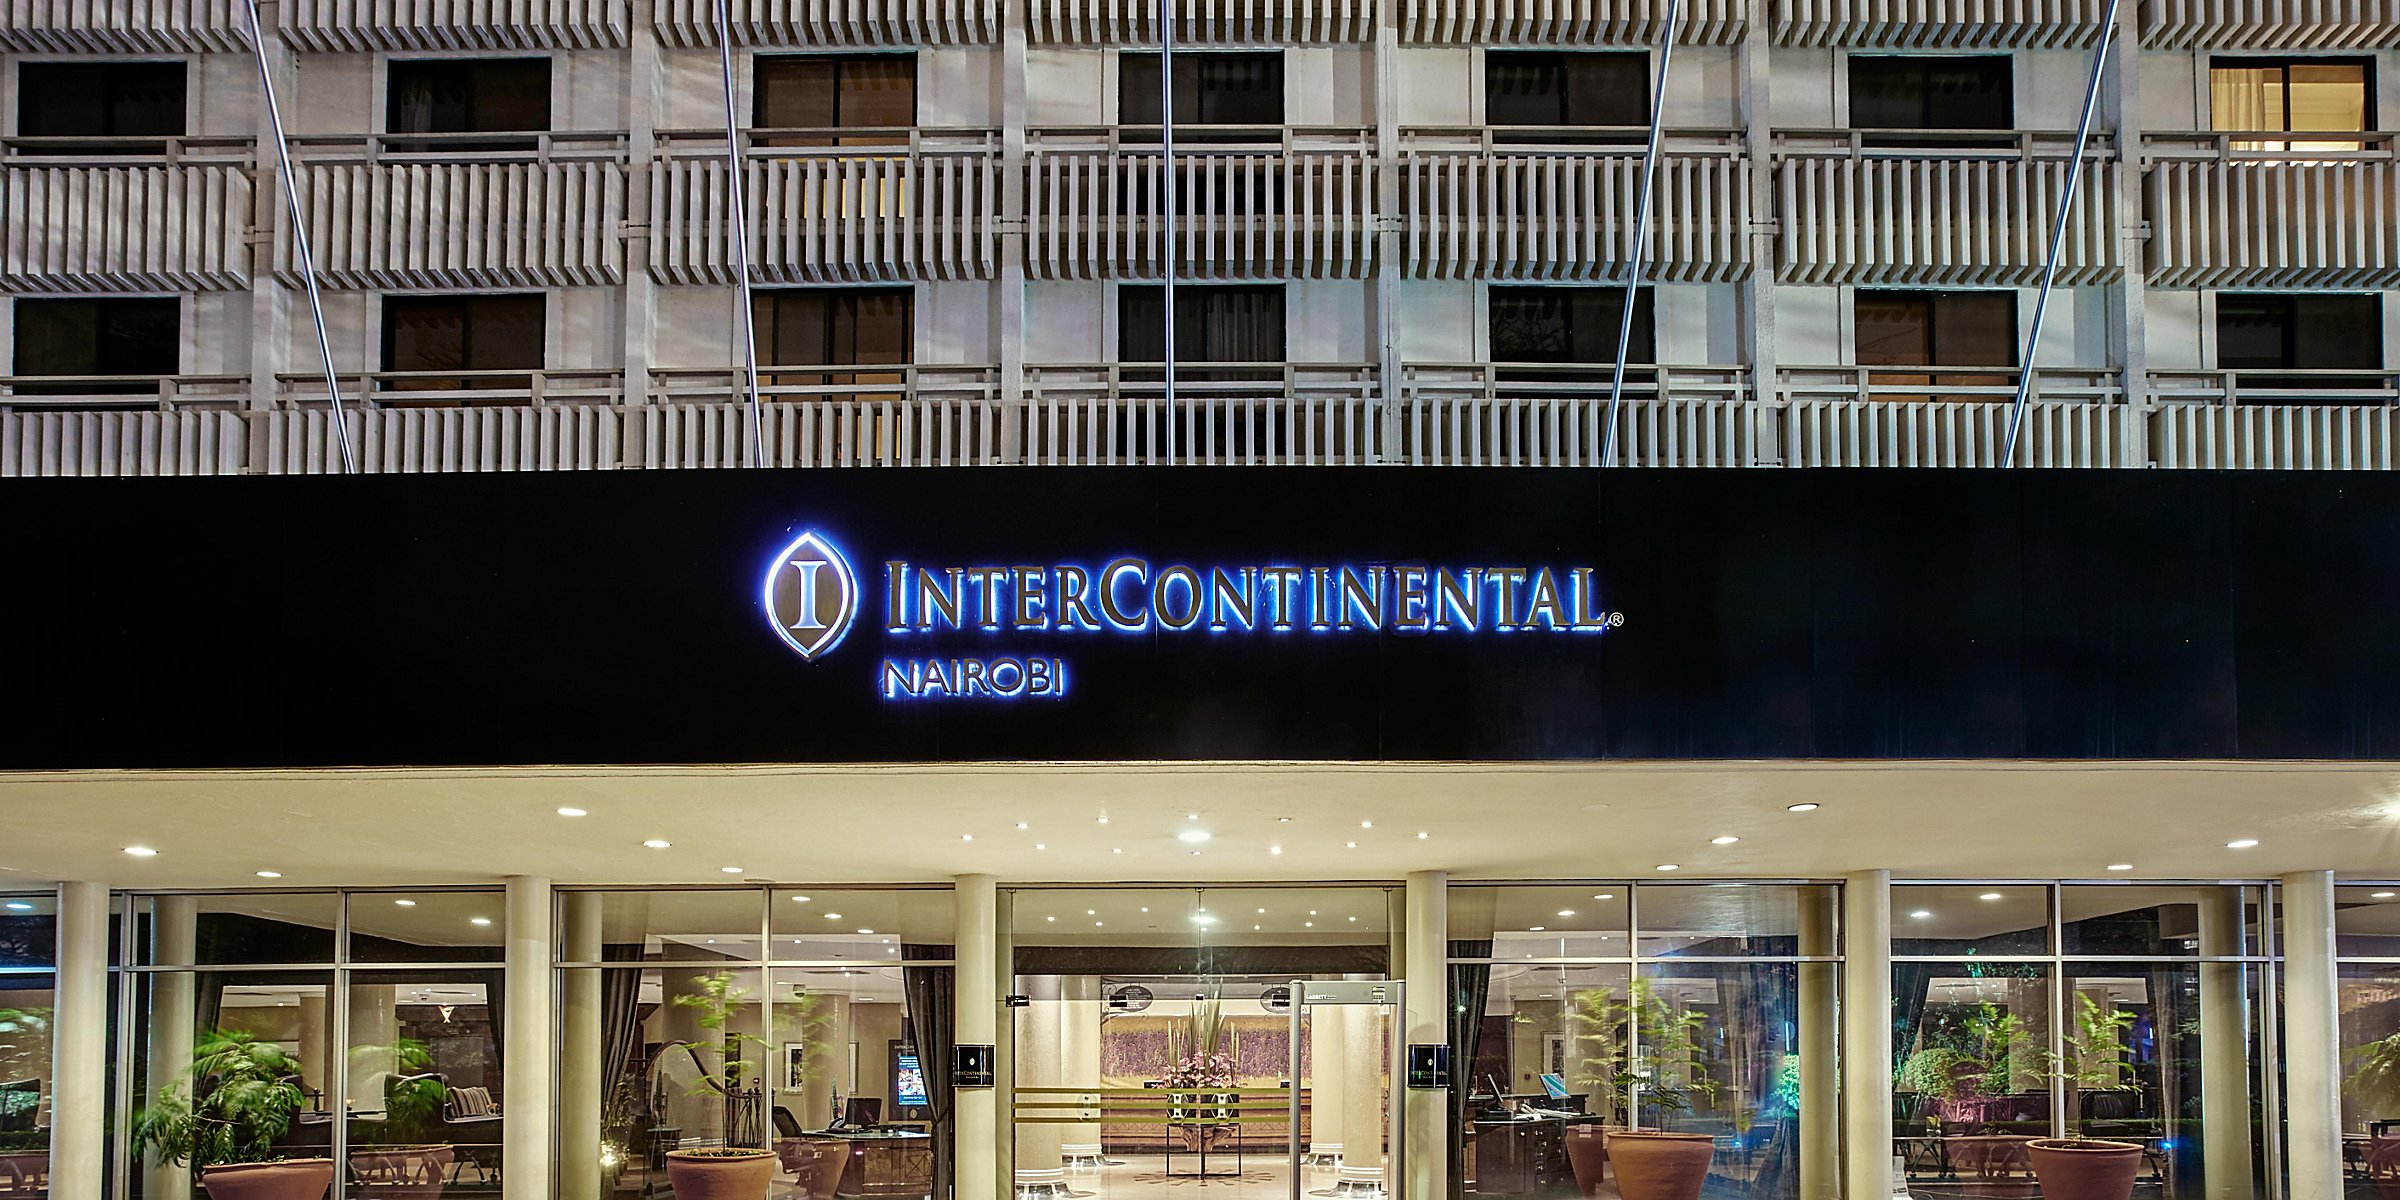 Hoteles Intercontinental Nairobi Hoteles De Lujo En